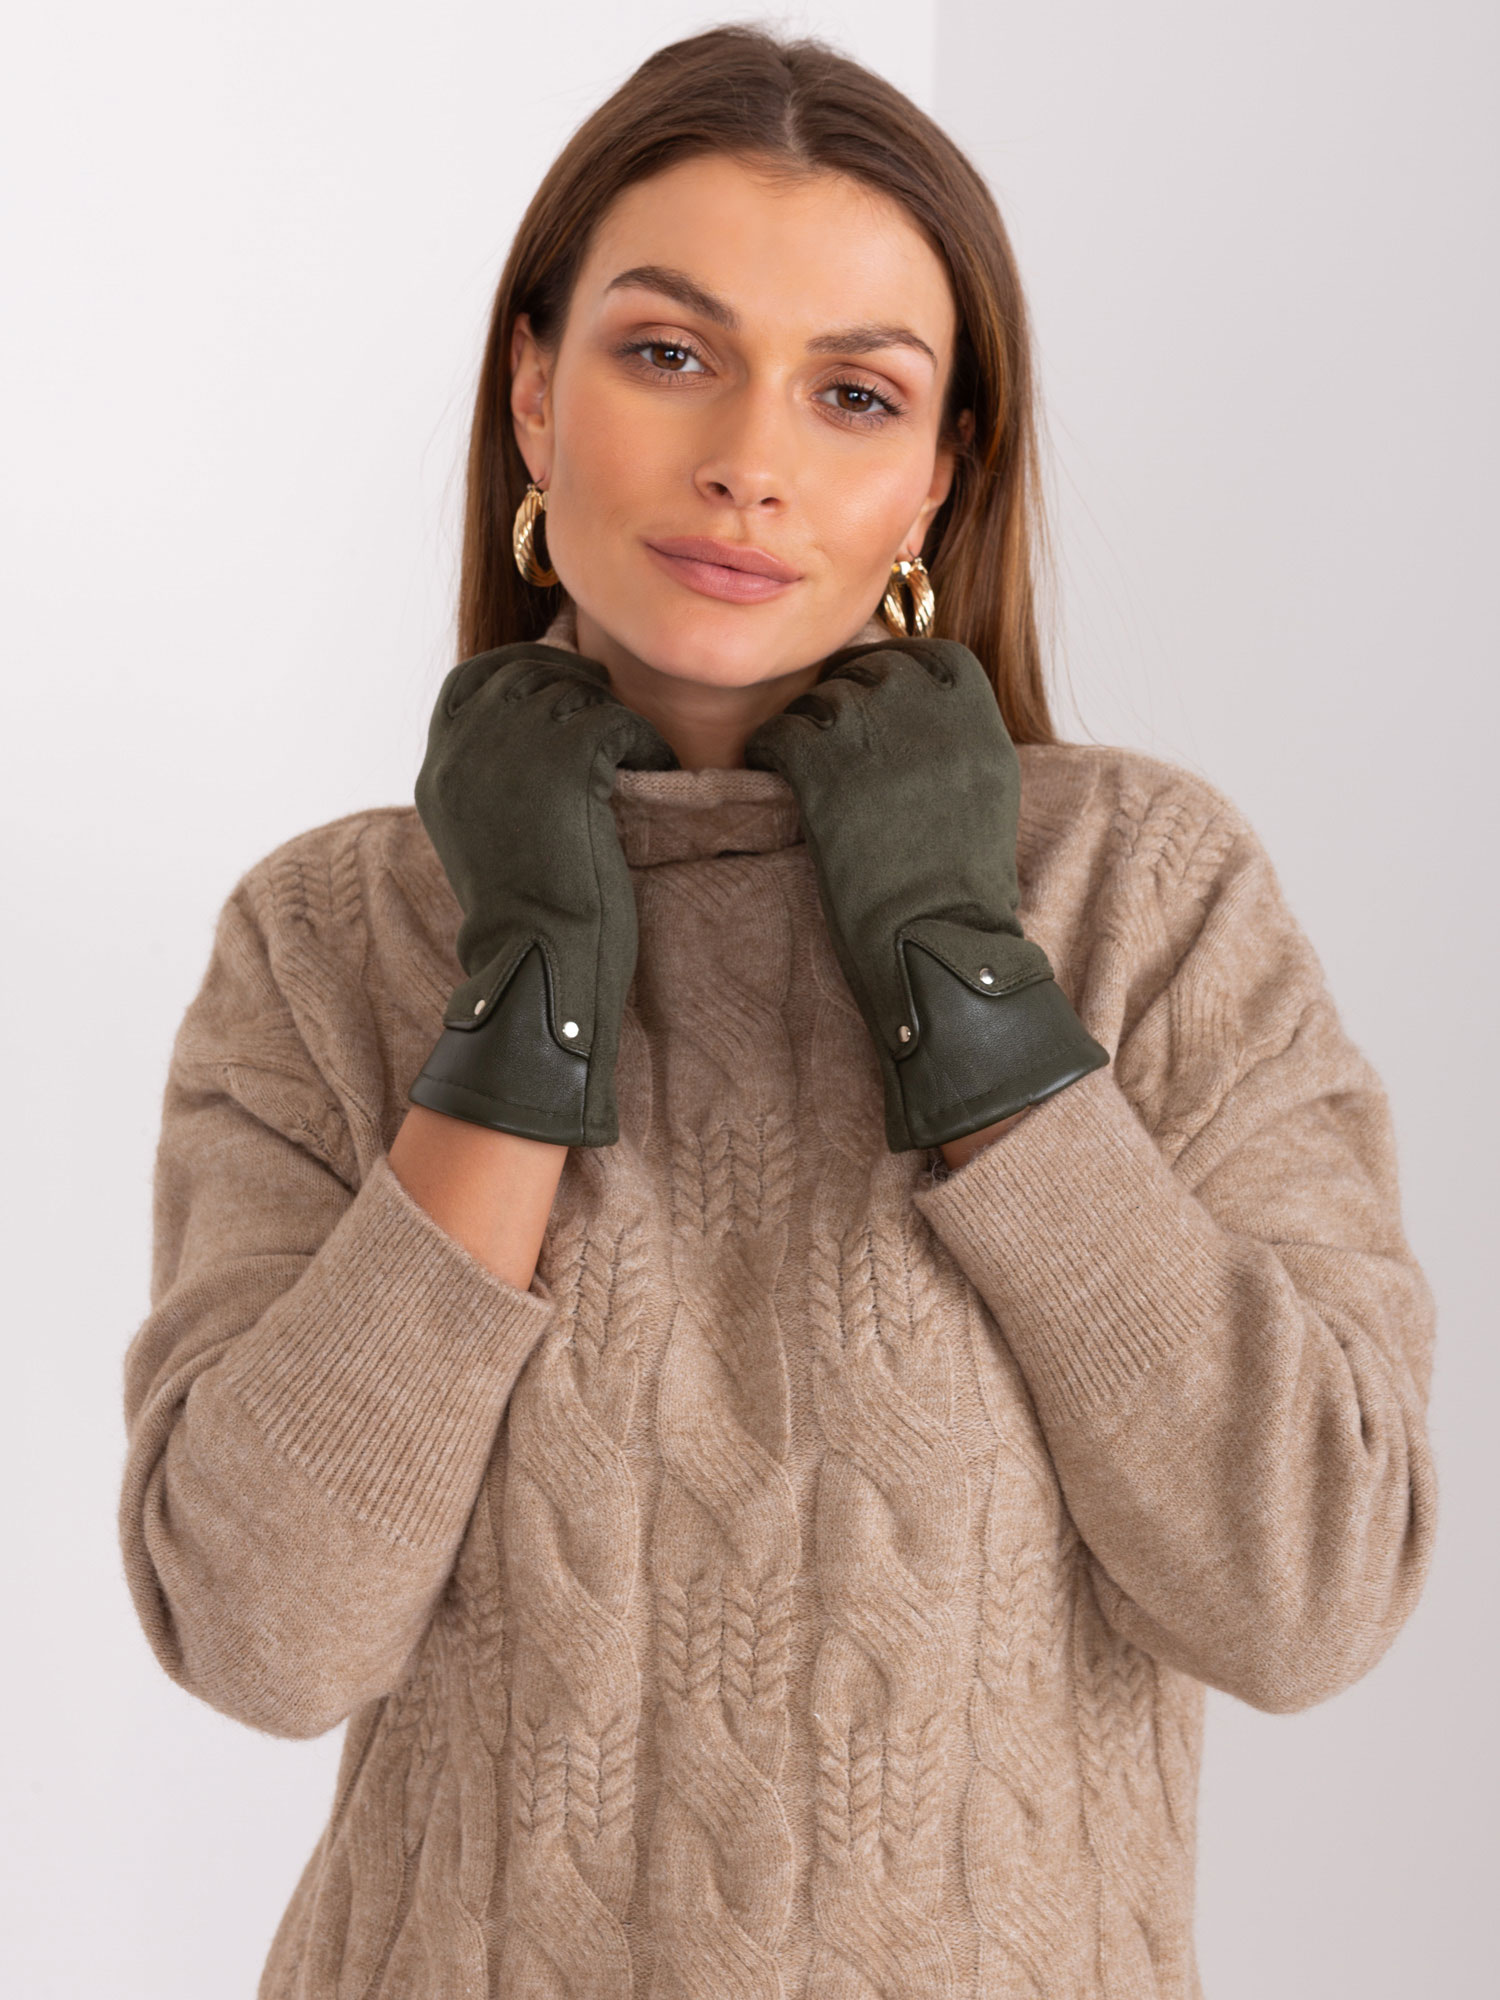 Tmavé khaki elegantní rukavice AT-RK-239507.61P-khaki Velikost: L/XL